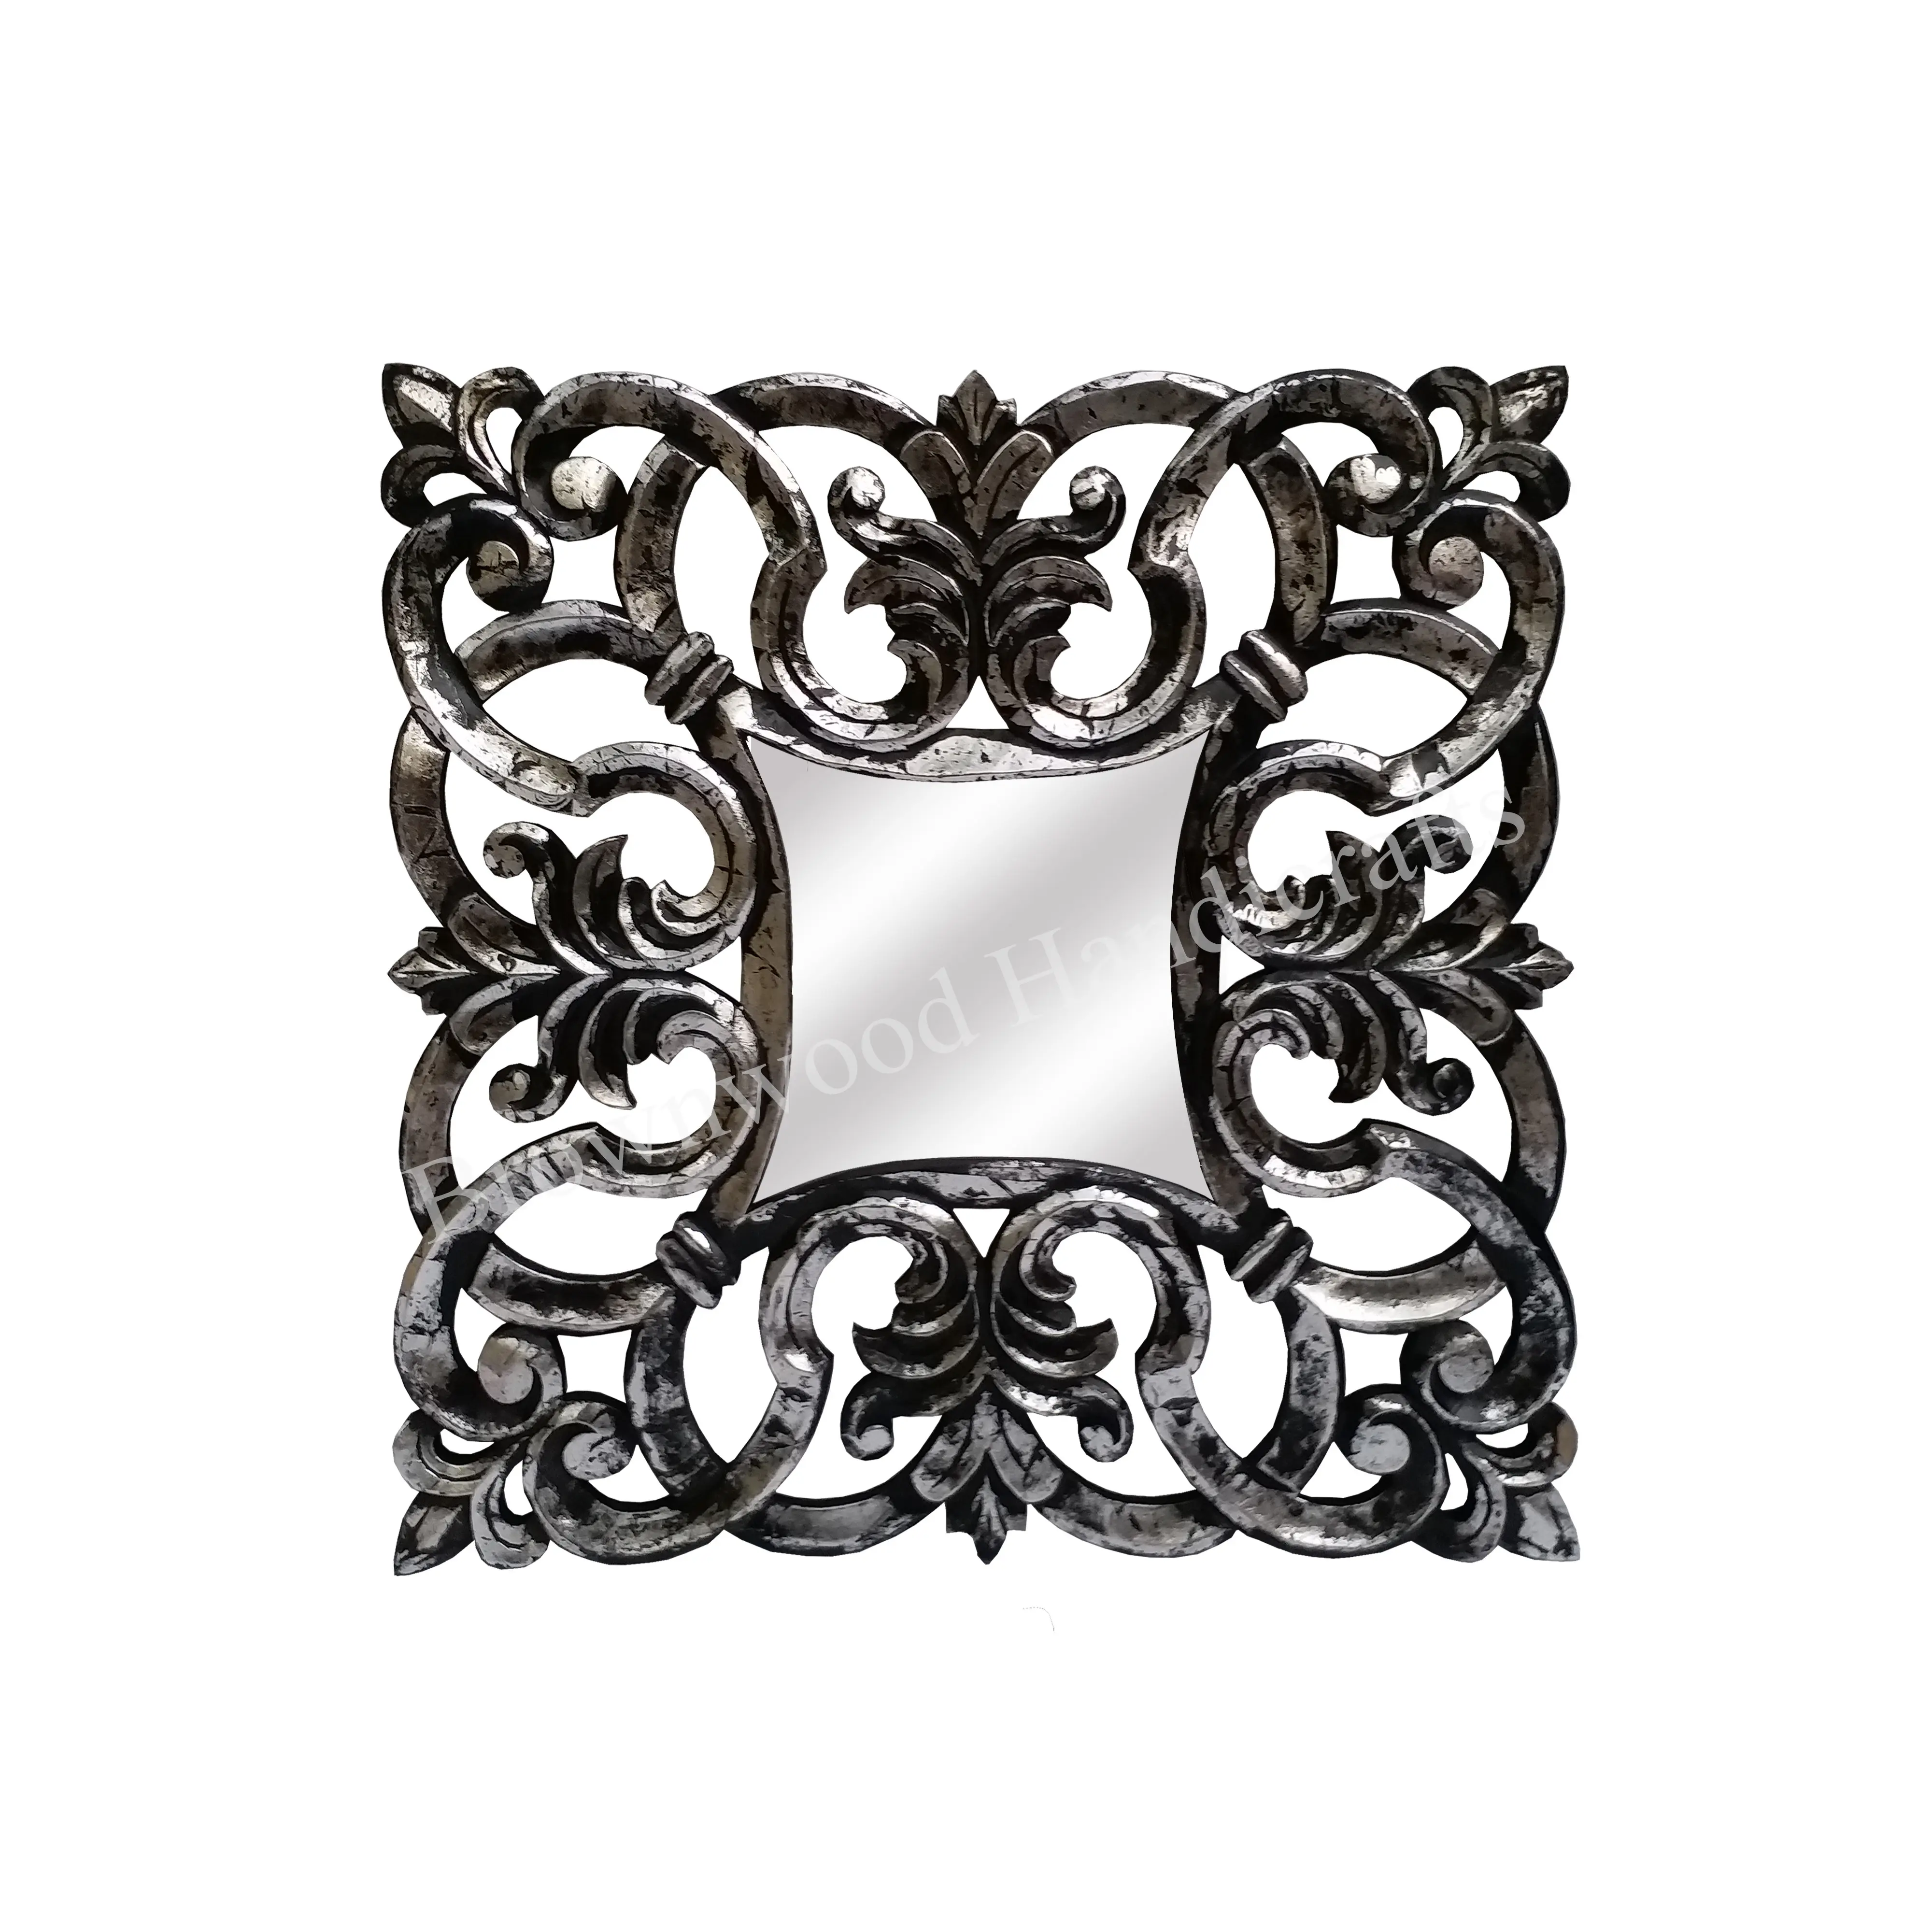 Изысканная квадратная черная деревянная резная настенная декоративная зеркальная рамка античная элегантная настенная панель по низкой цене